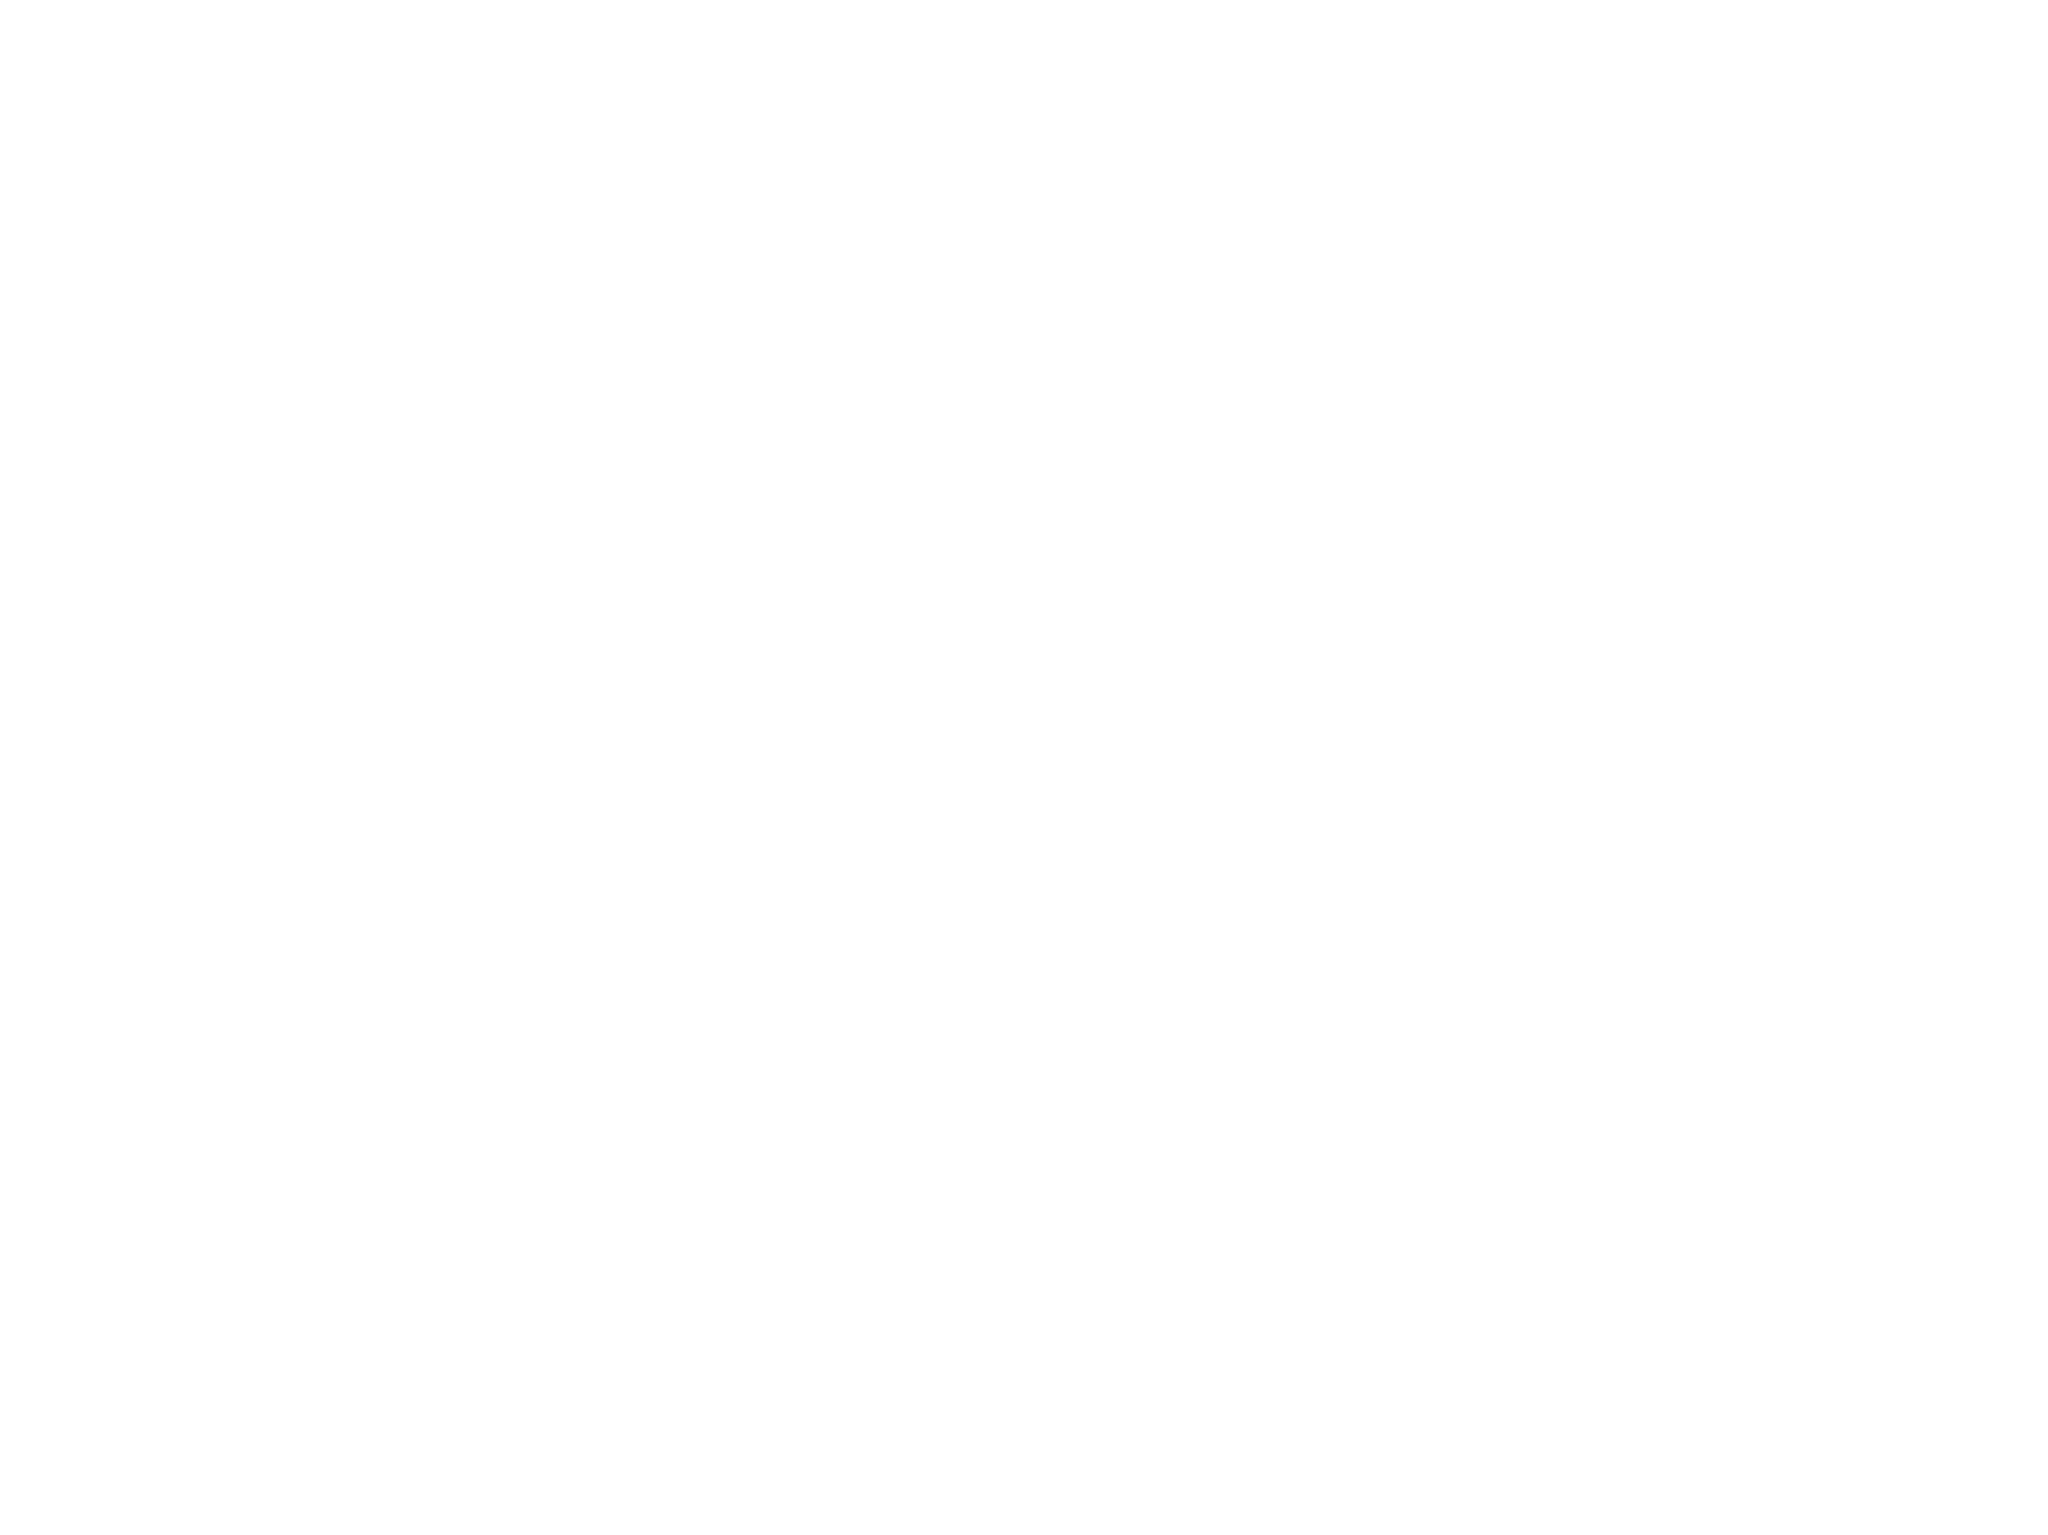 Power Espresso 20 Matic